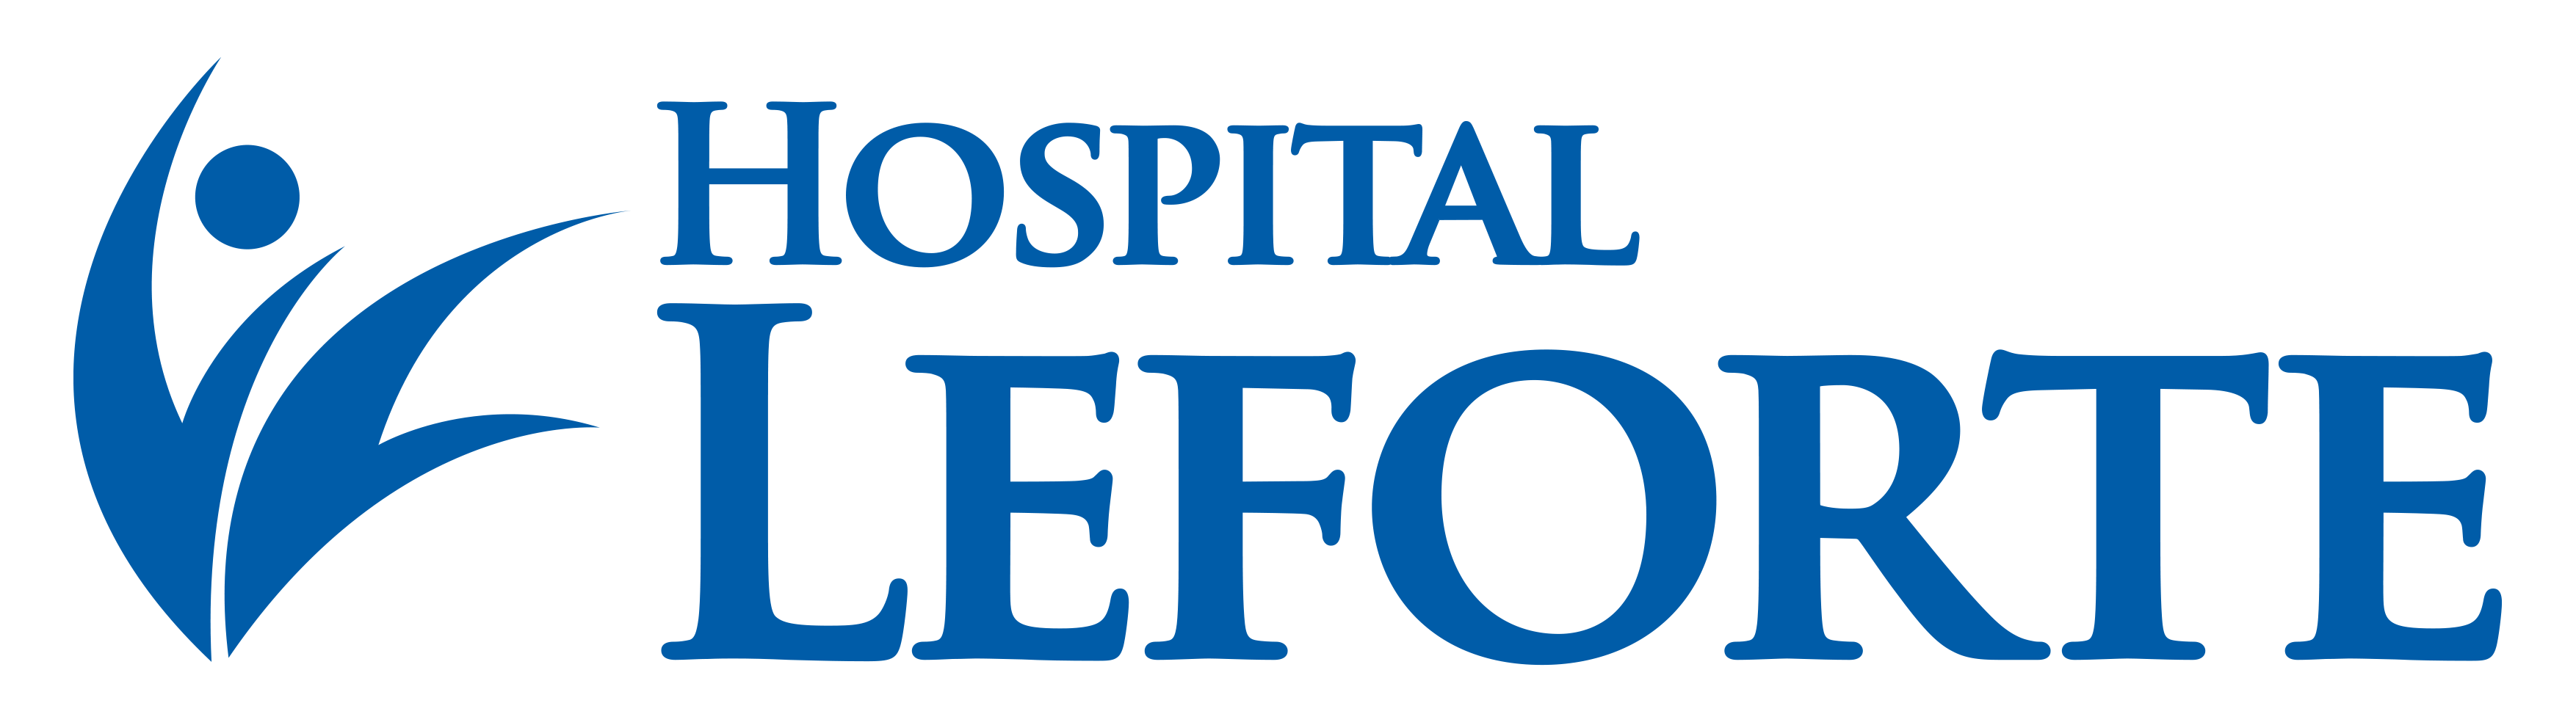 logo_hospitalleforte